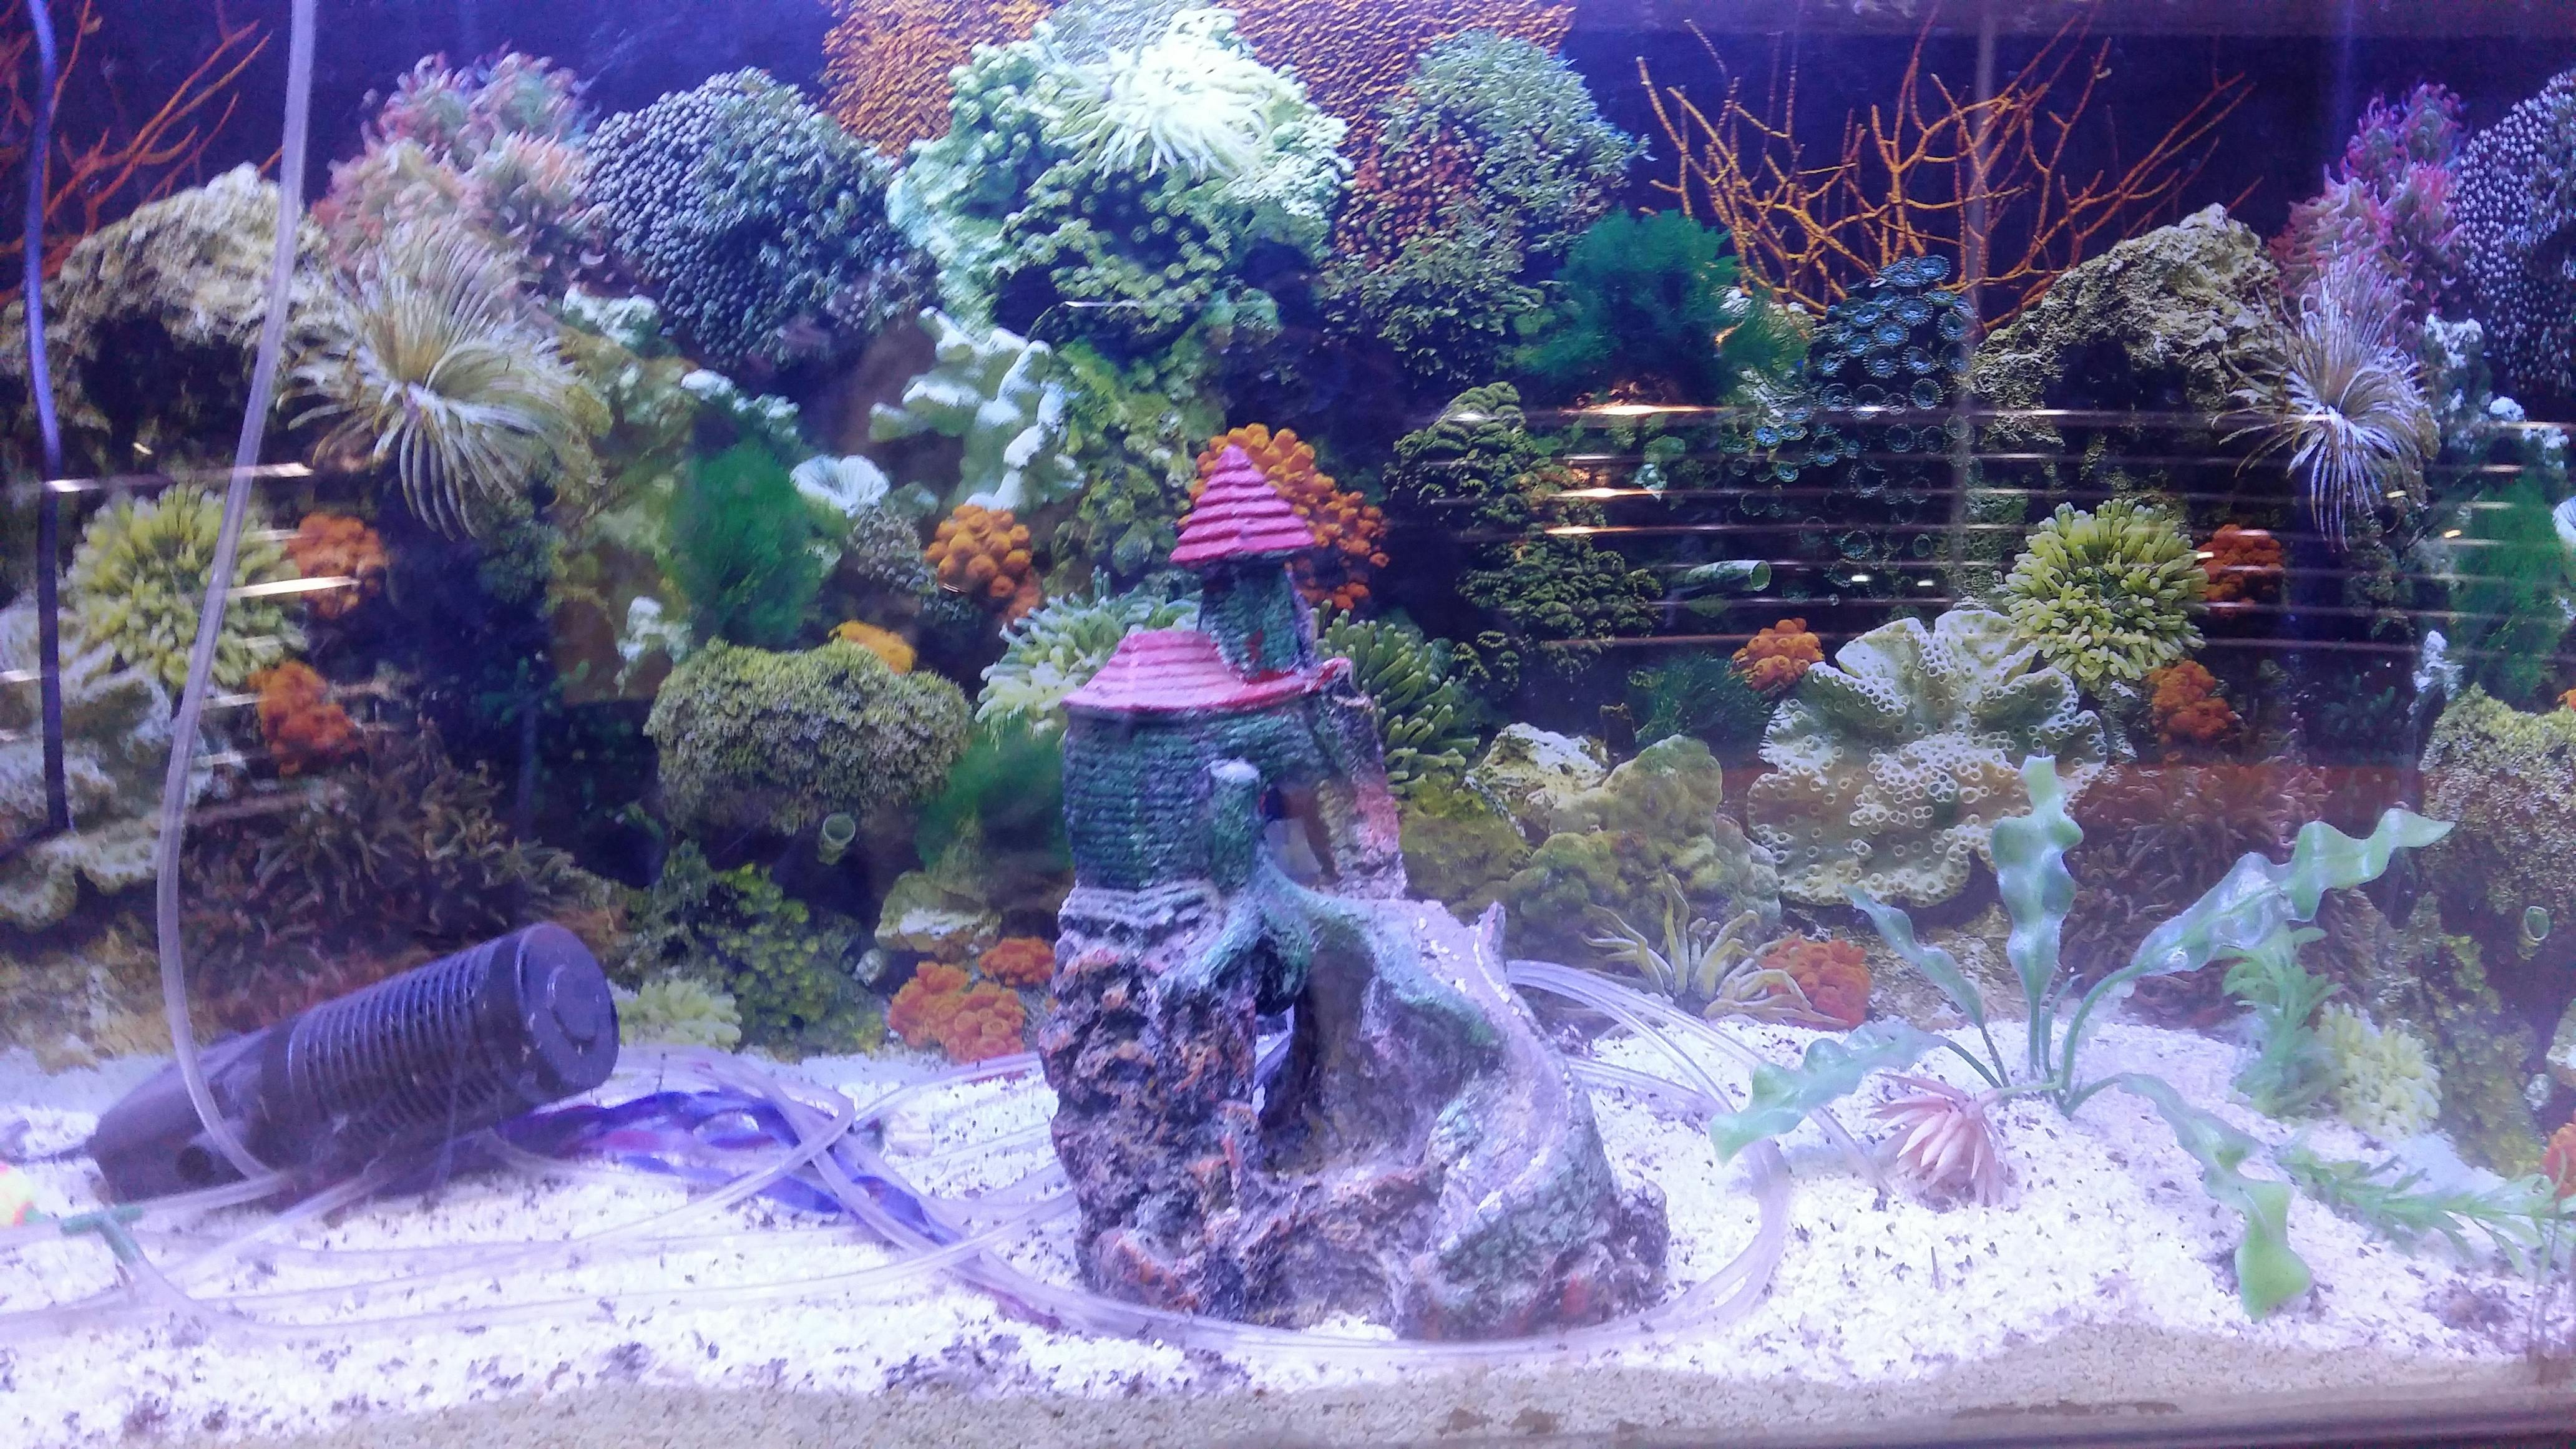 Free stock photo of fish tank